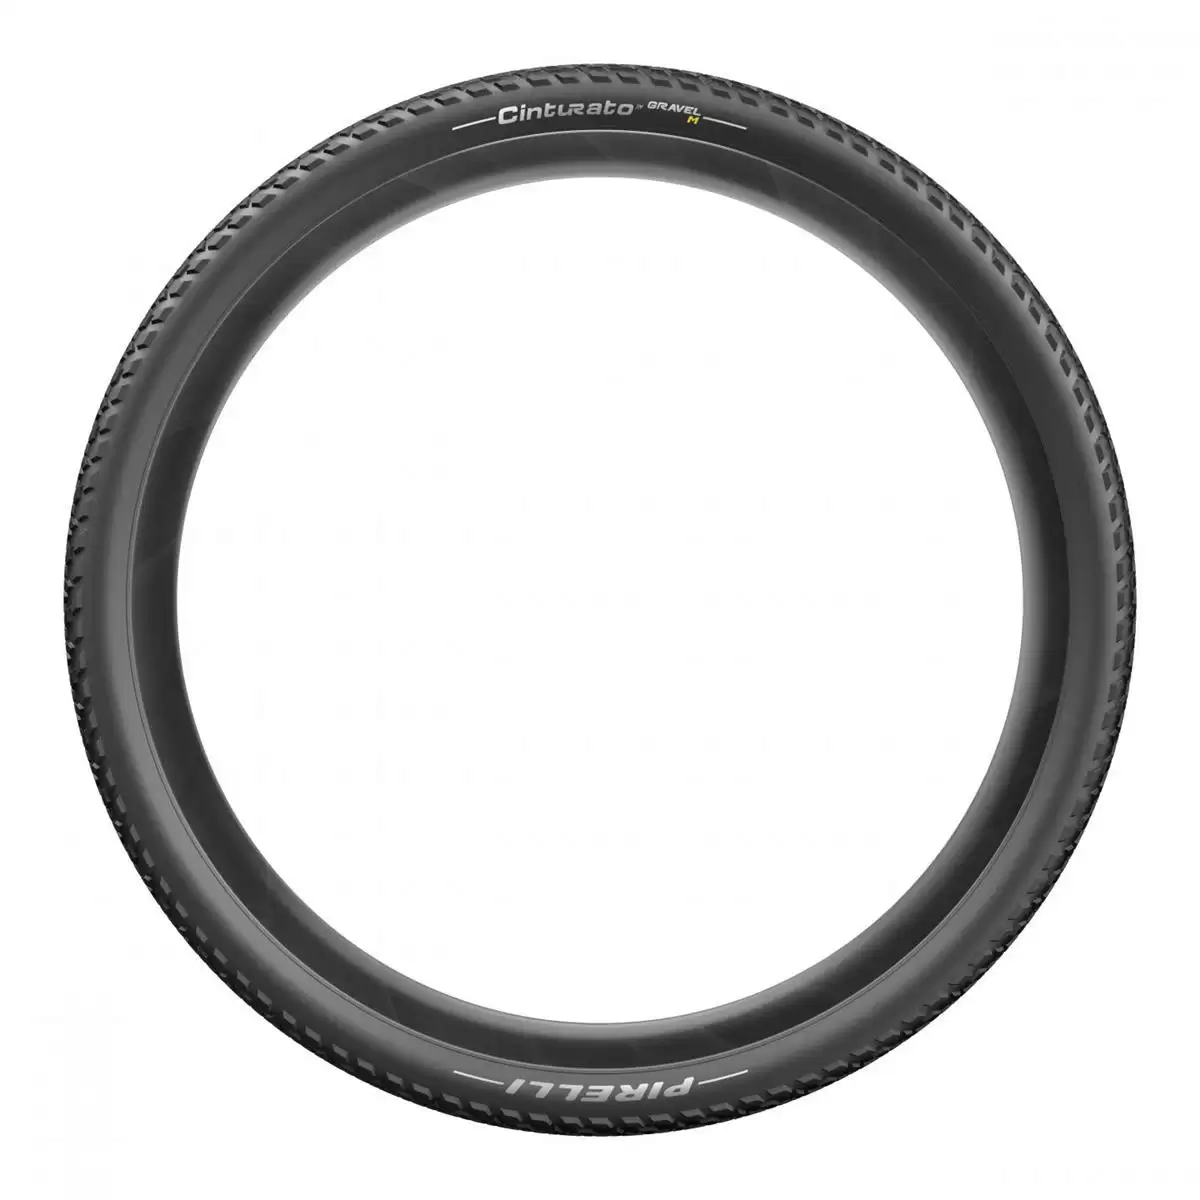 Tire Cinturato Gravel Mixed Terrain 650x45c Tubeless Ready Black #3